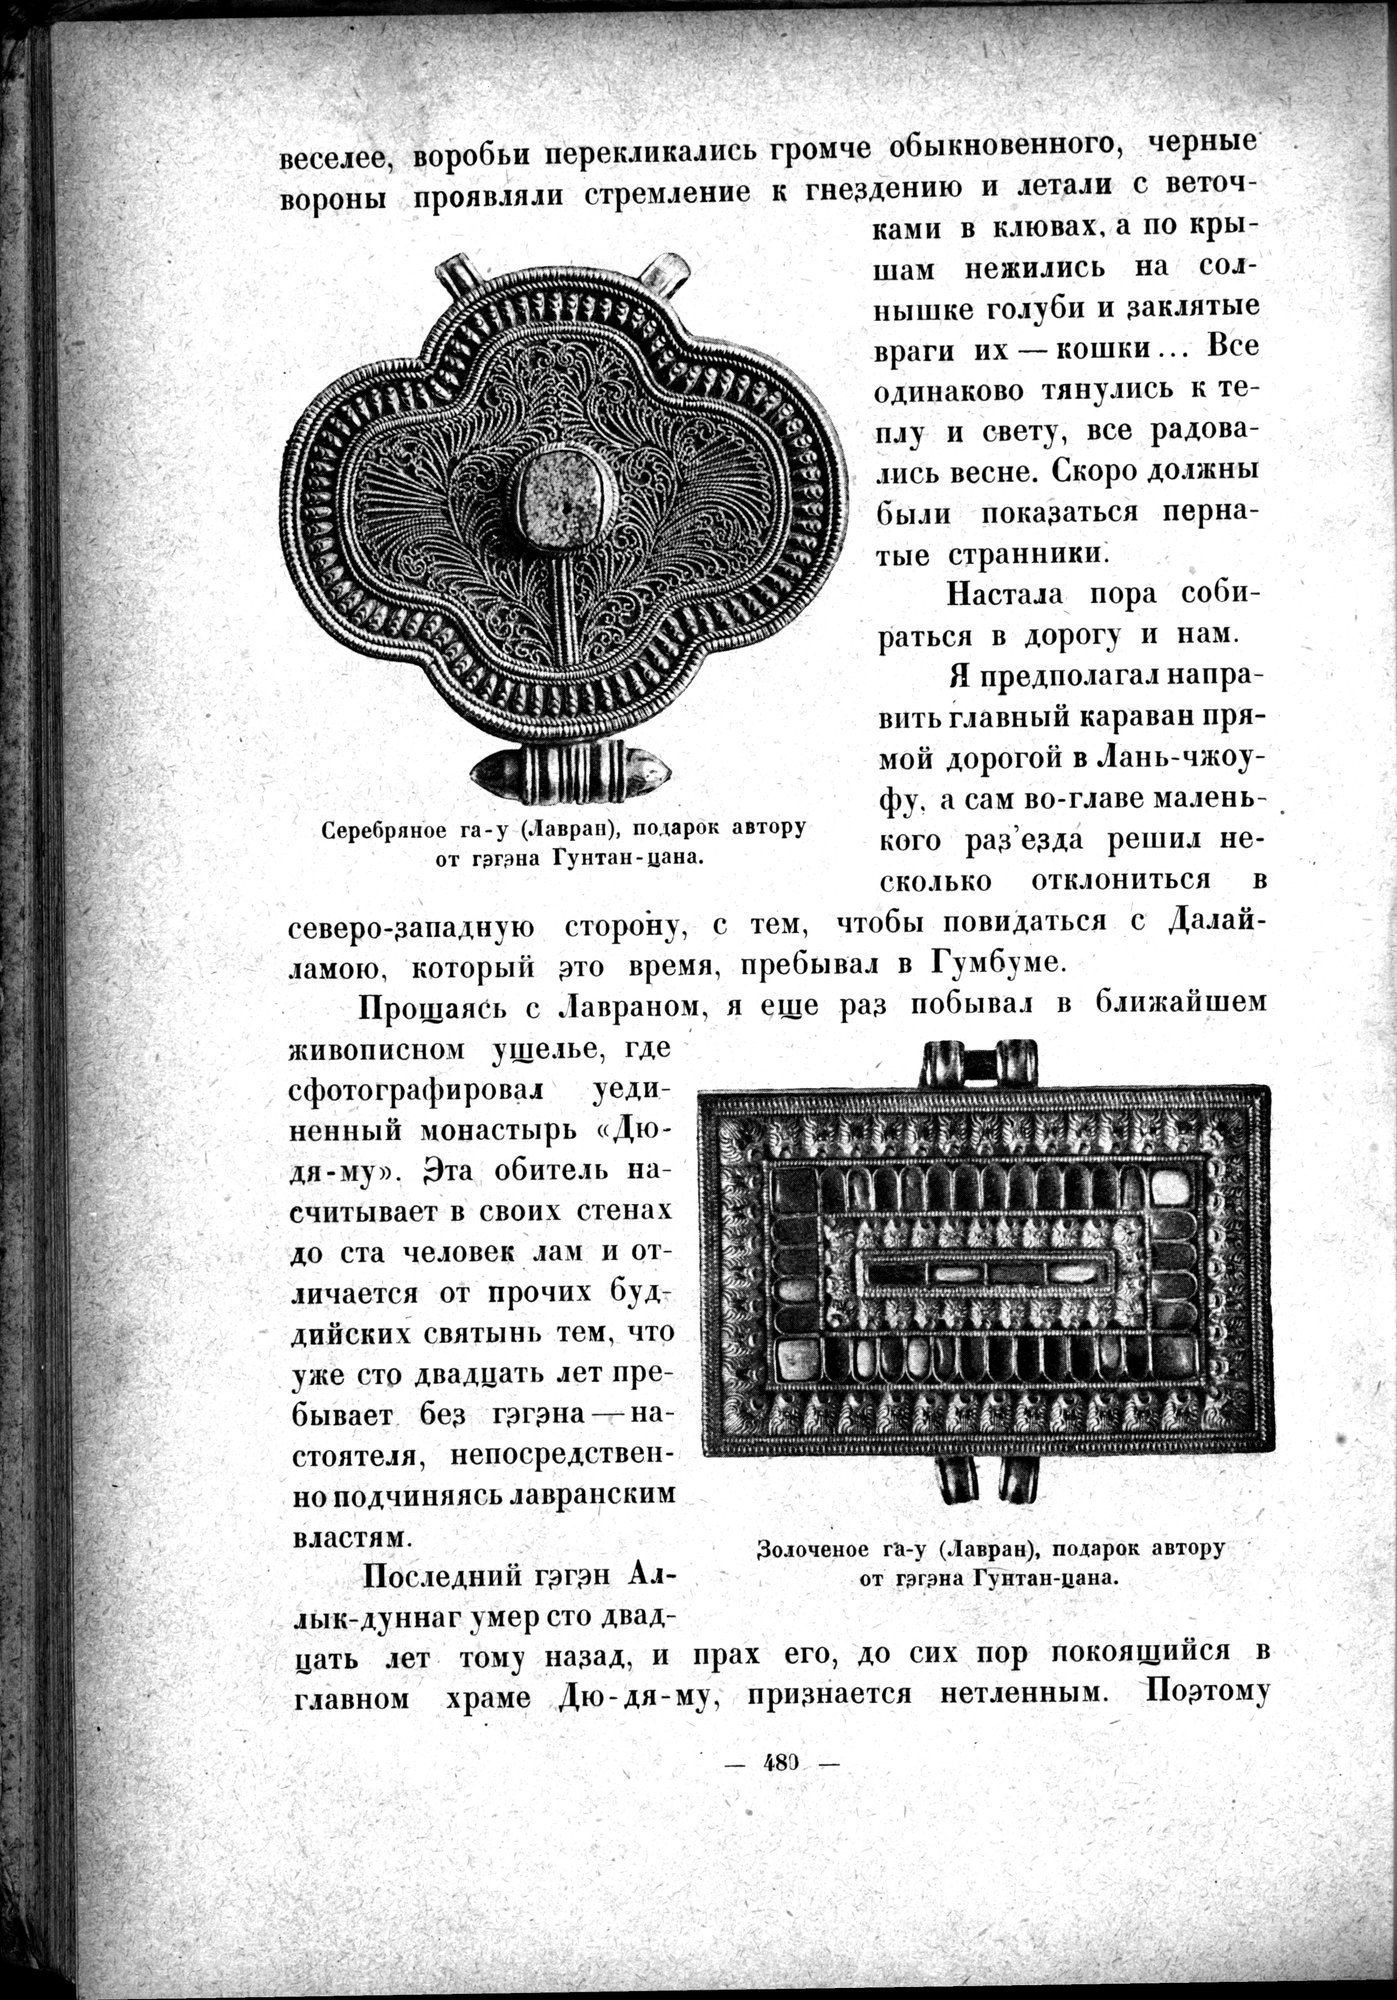 Mongoliya i Amdo i mertby gorod Khara-Khoto : vol.1 / Page 548 (Grayscale High Resolution Image)